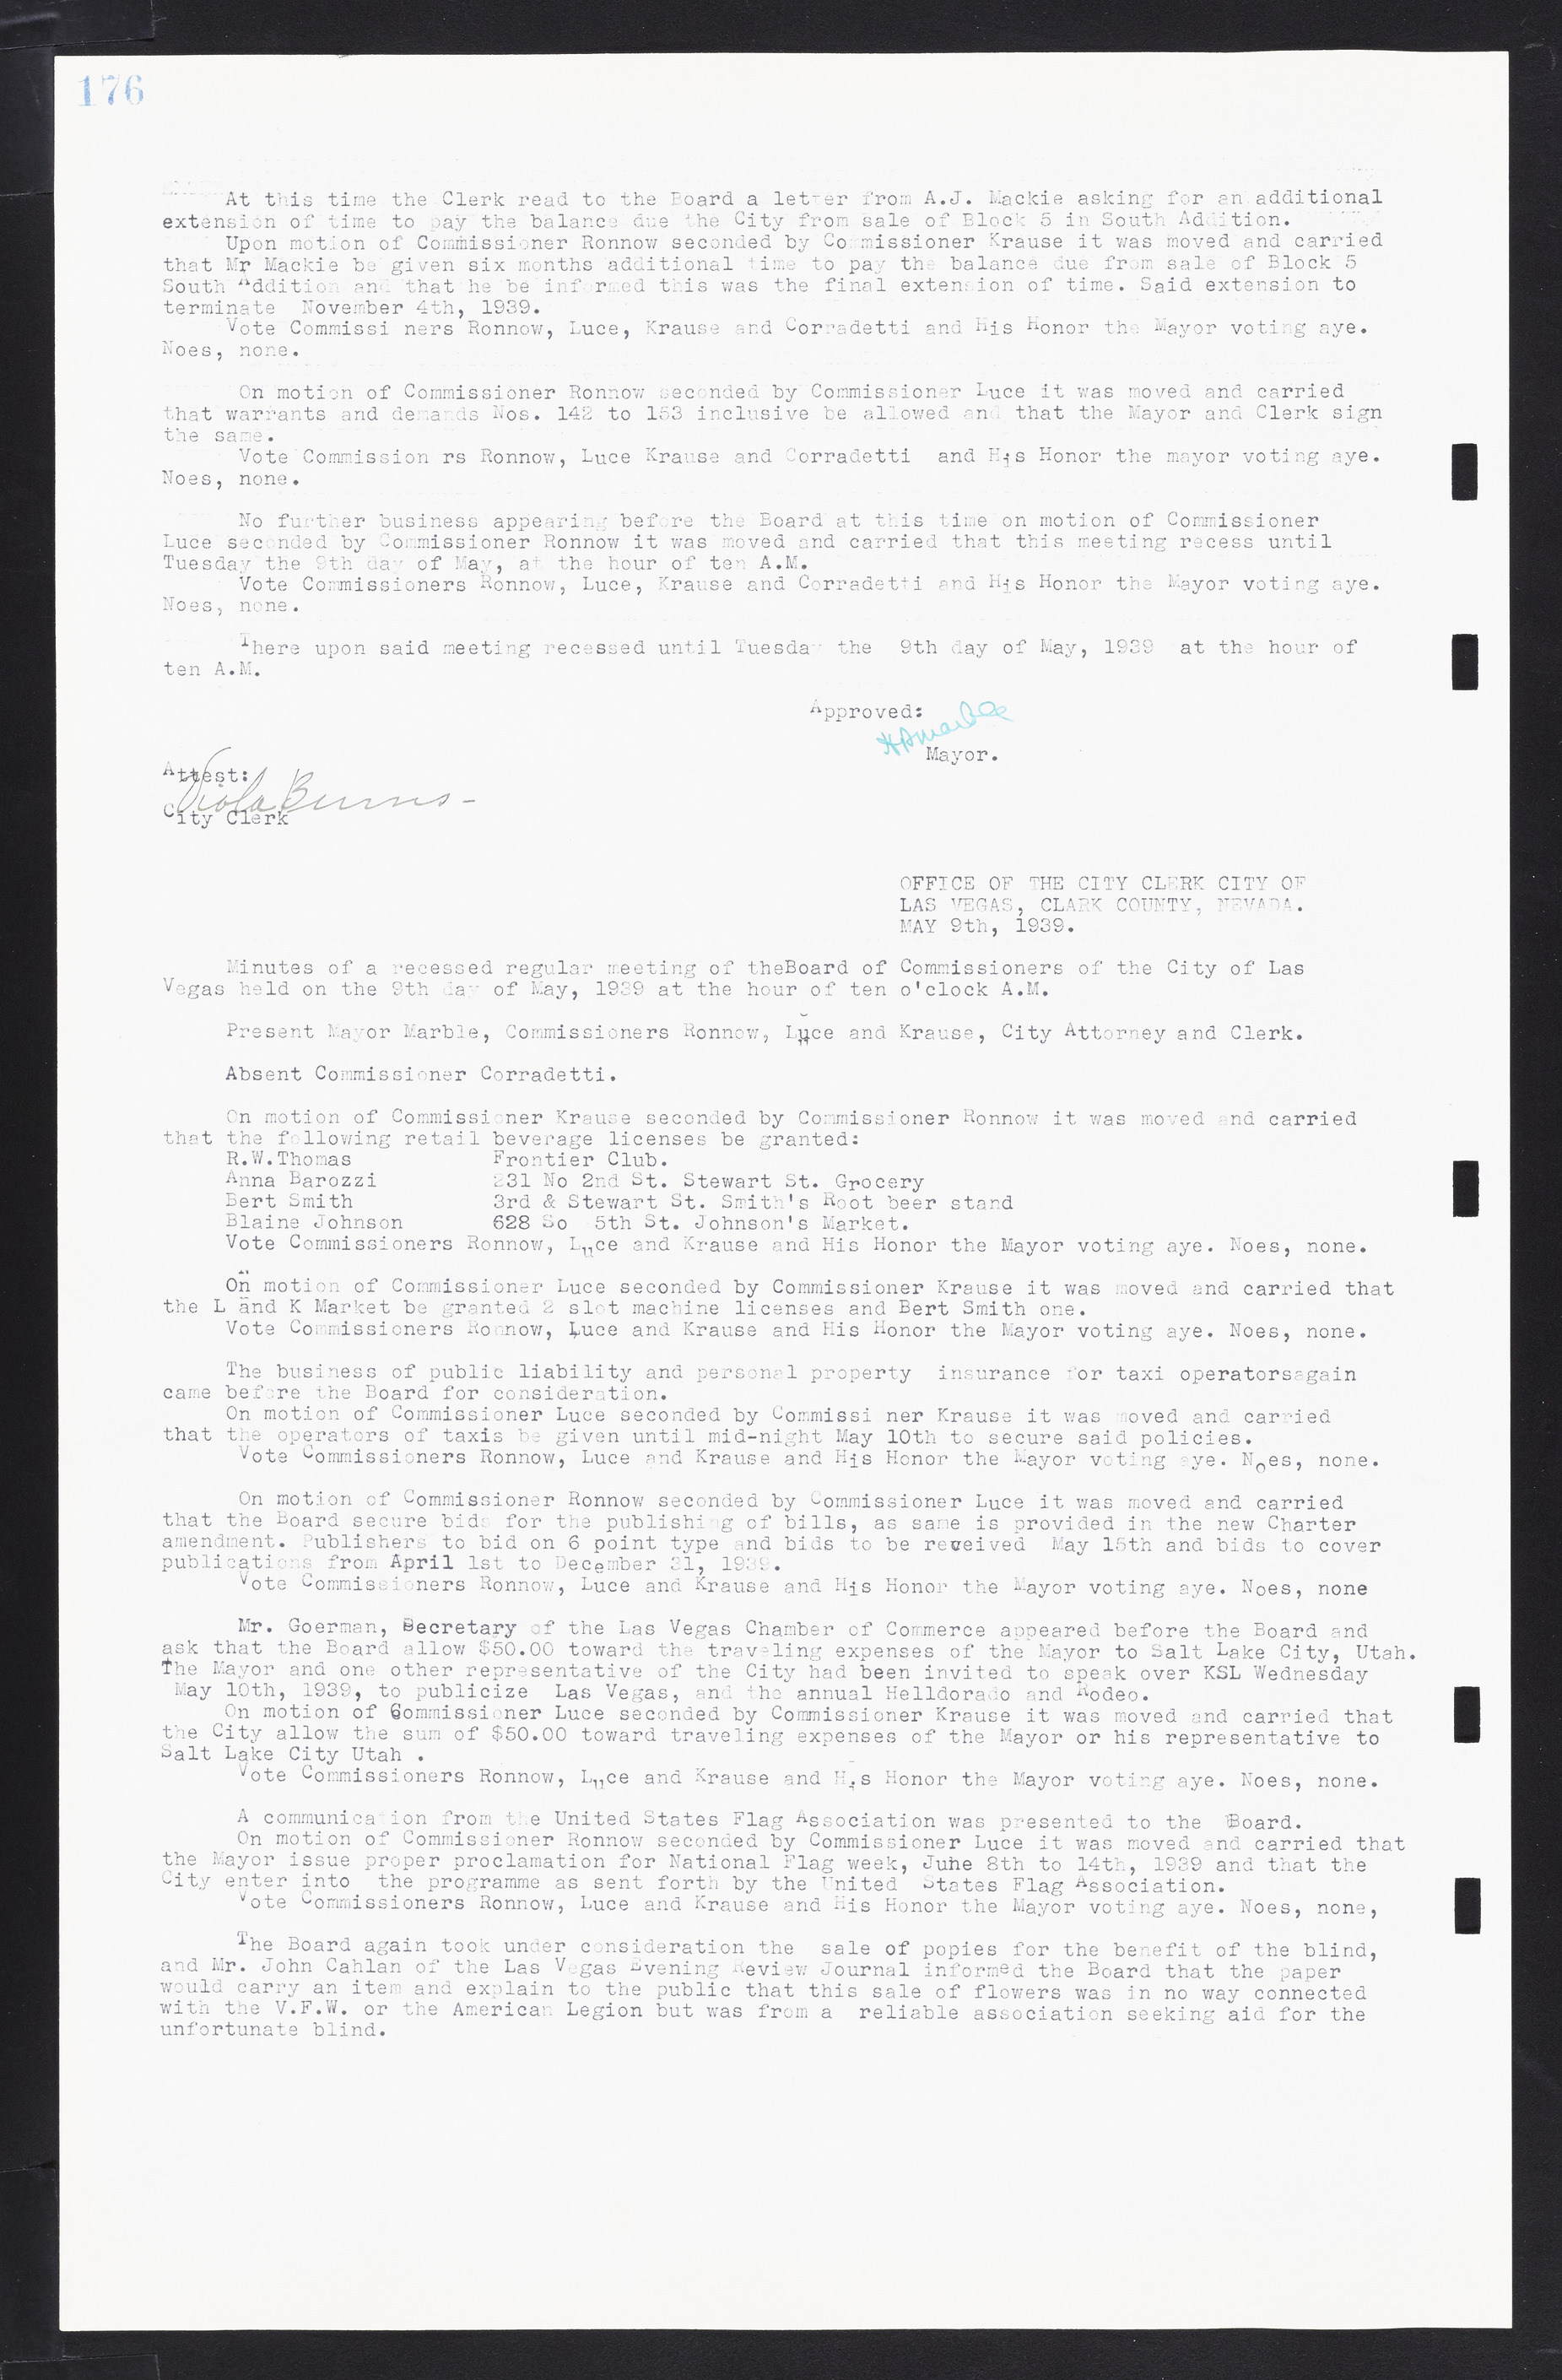 Las Vegas City Commission Minutes, February 17, 1937 to August 4, 1942, lvc000004-192